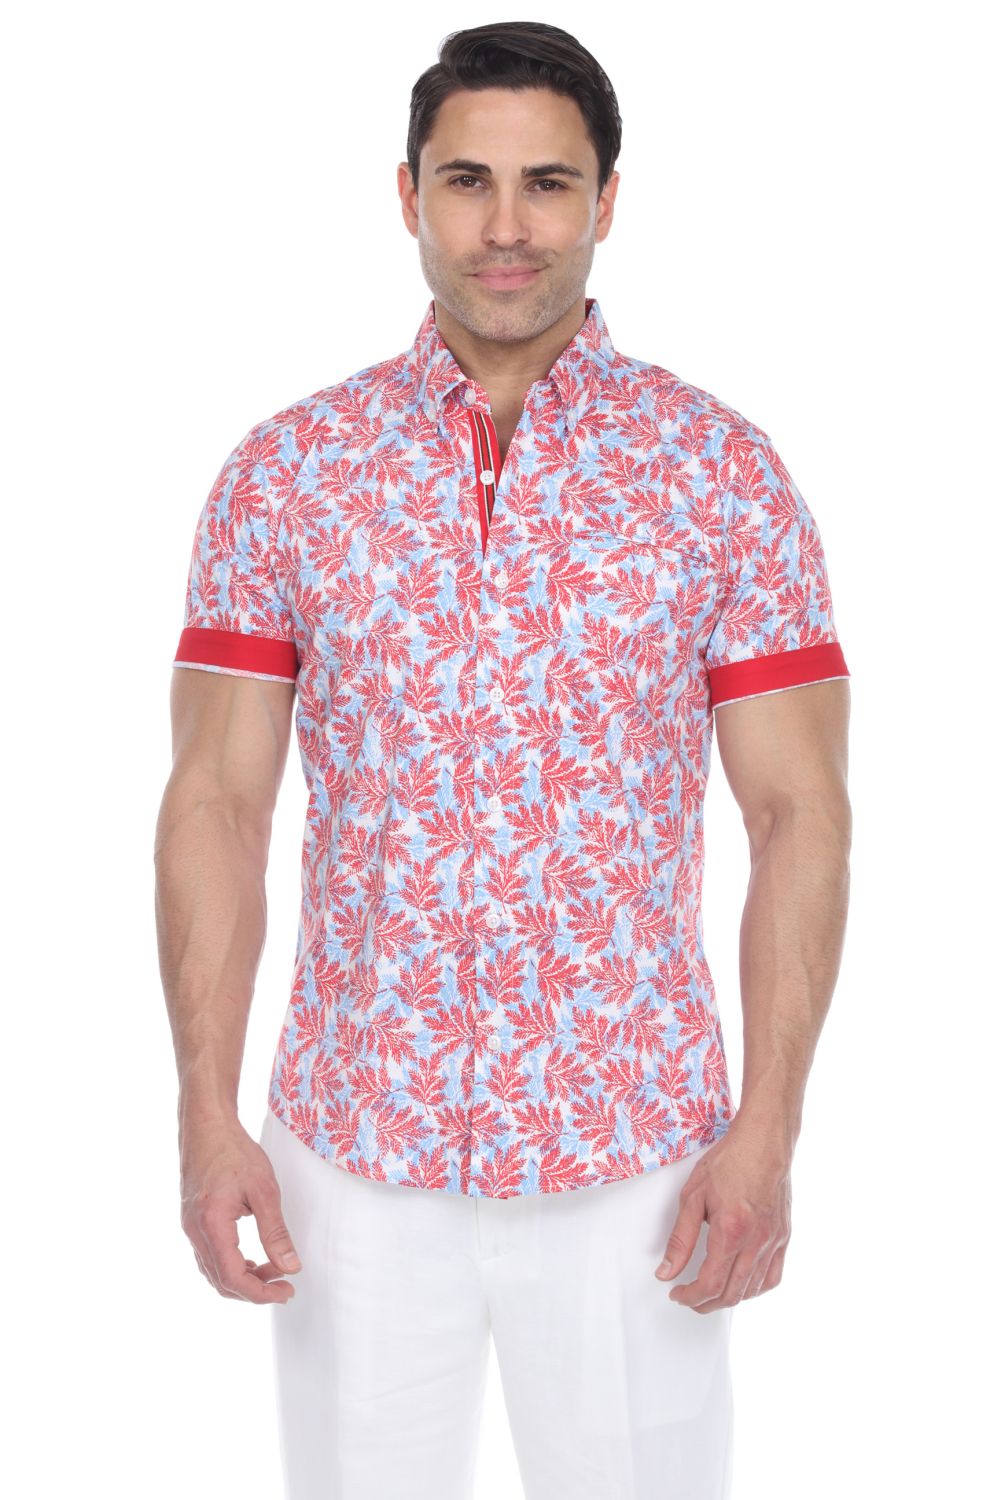 Tropical Design Shirt for Men,Short Sleeve